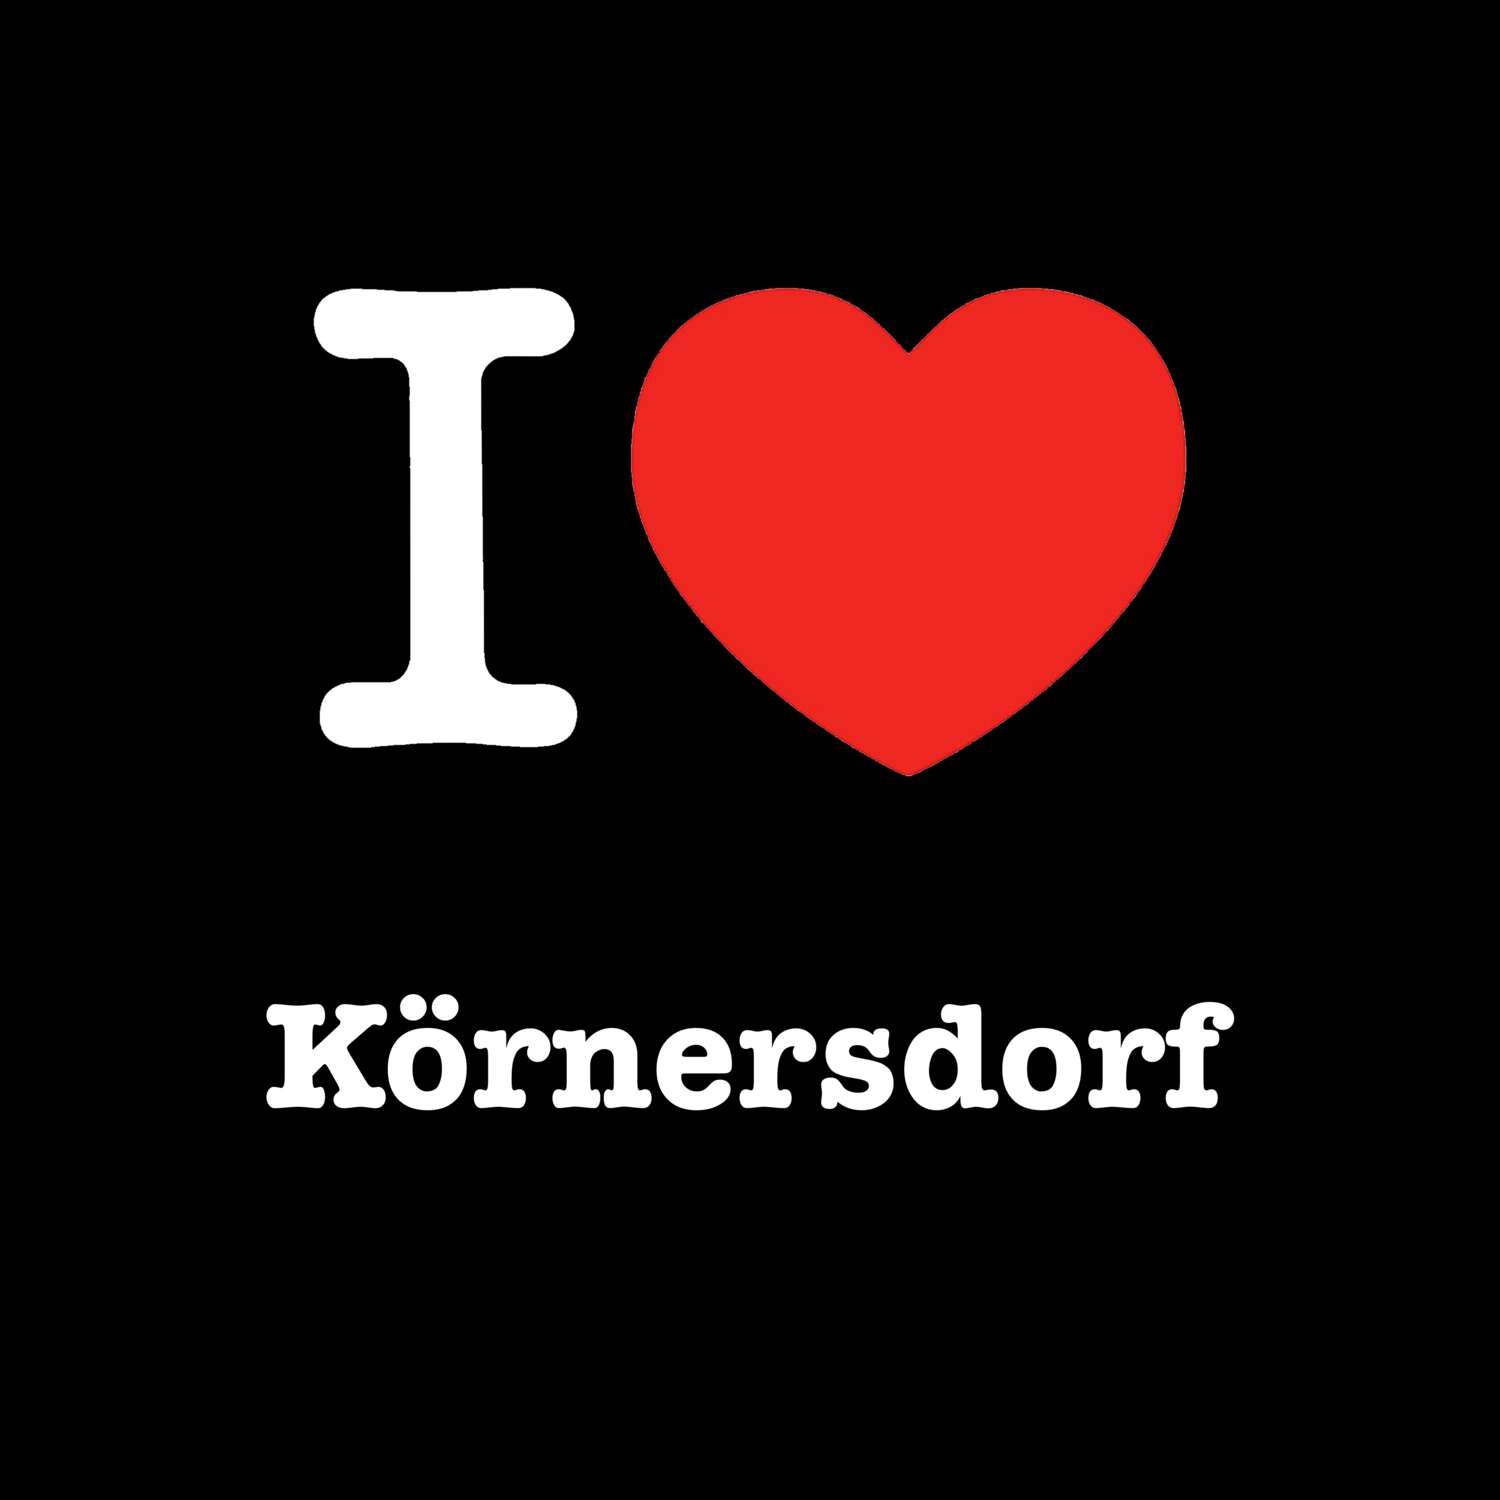 Körnersdorf T-Shirt »I love«